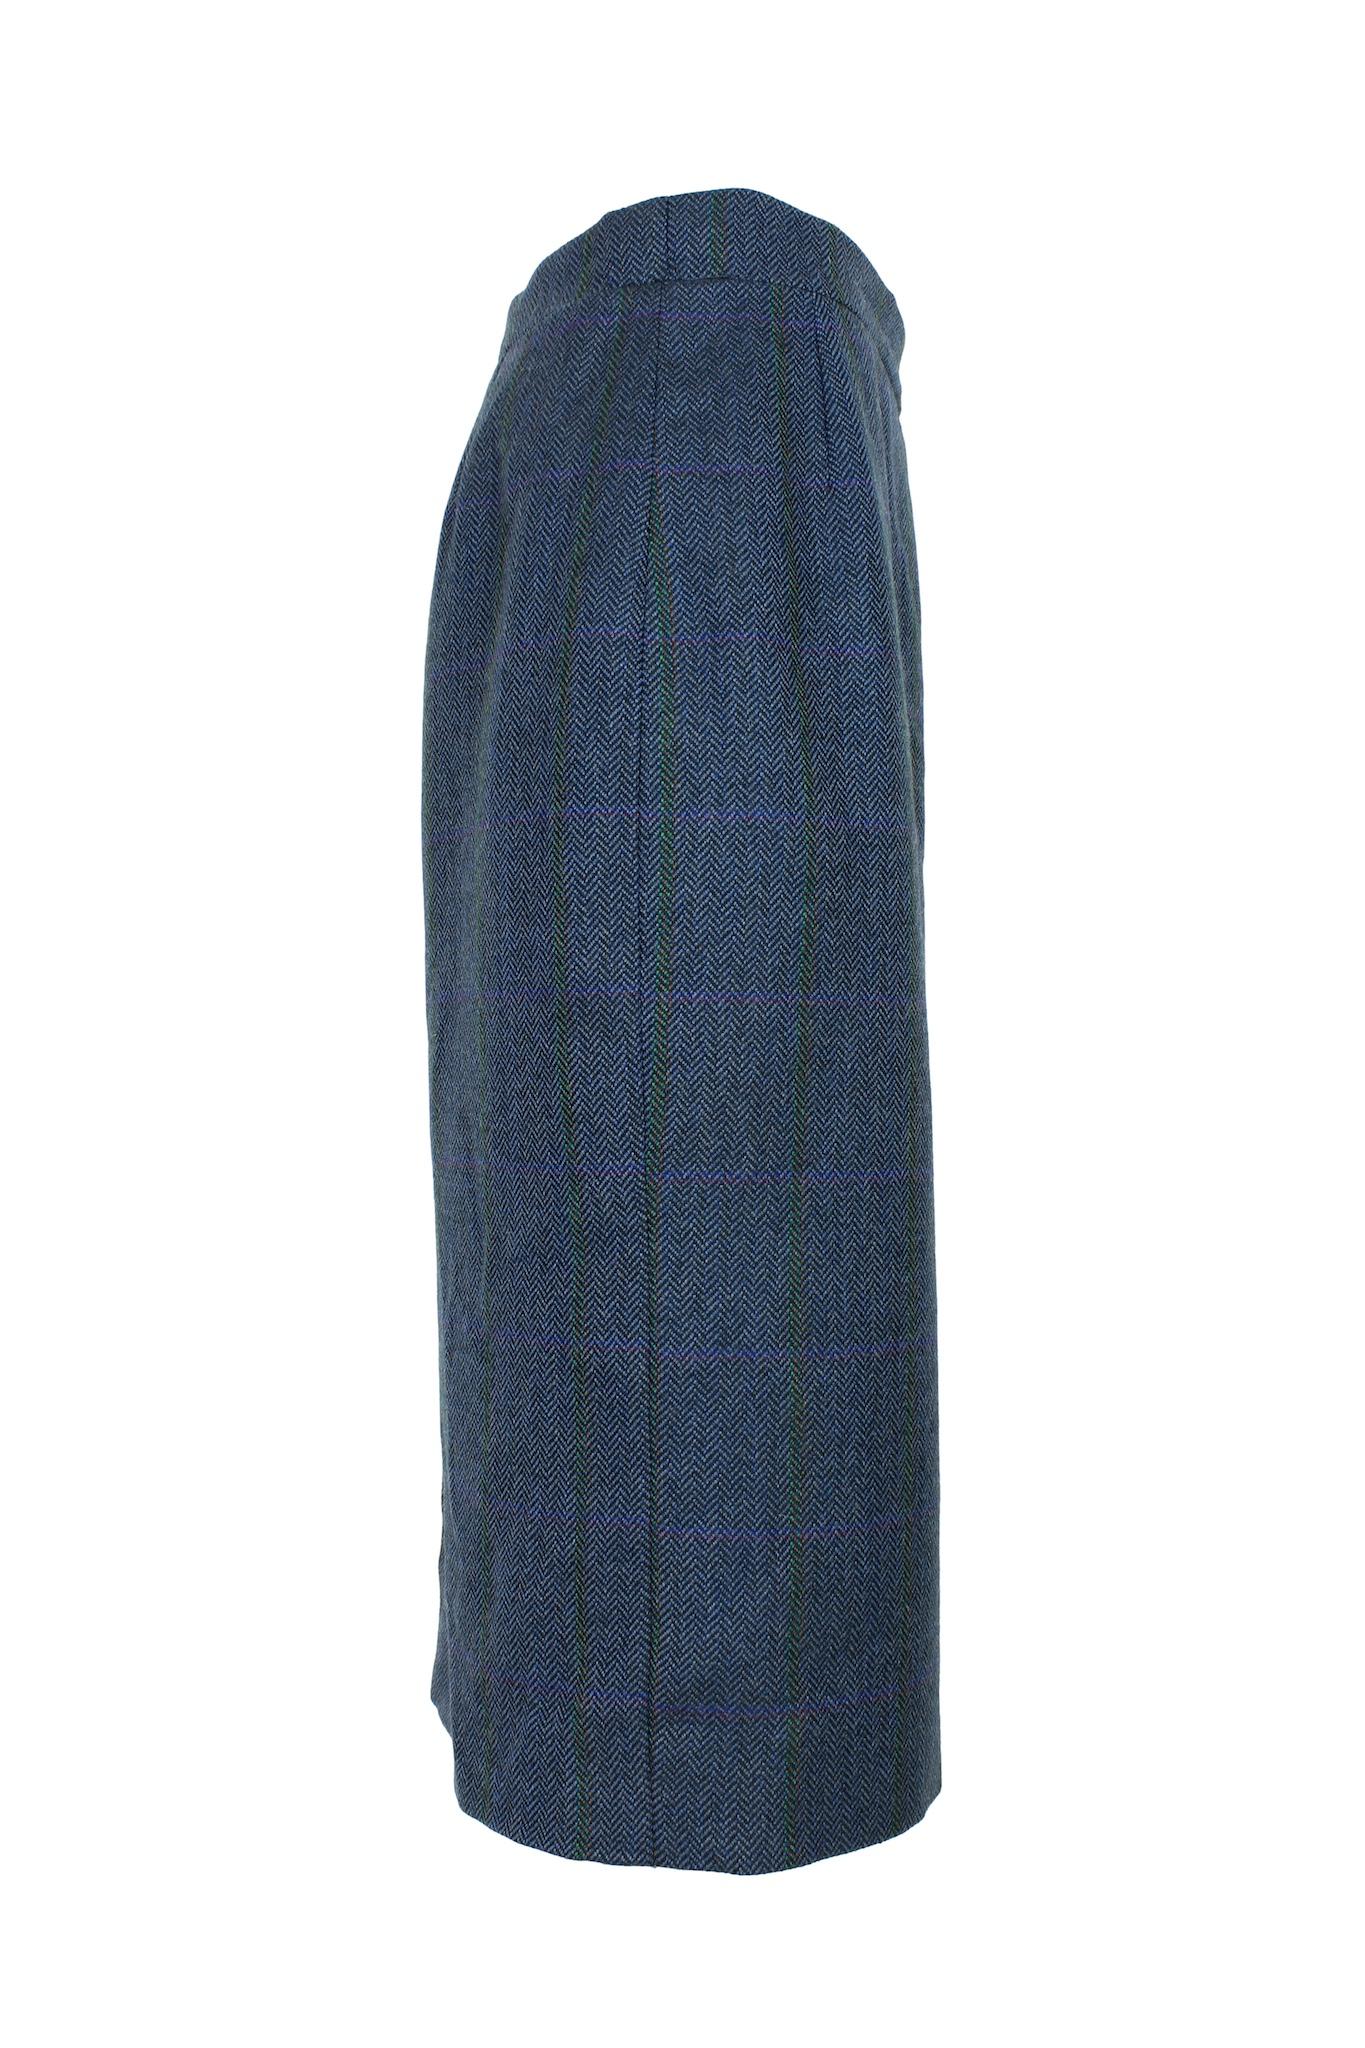 Black Burberry Blue Wool Herringbone Pencil Skirt 1980s For Sale